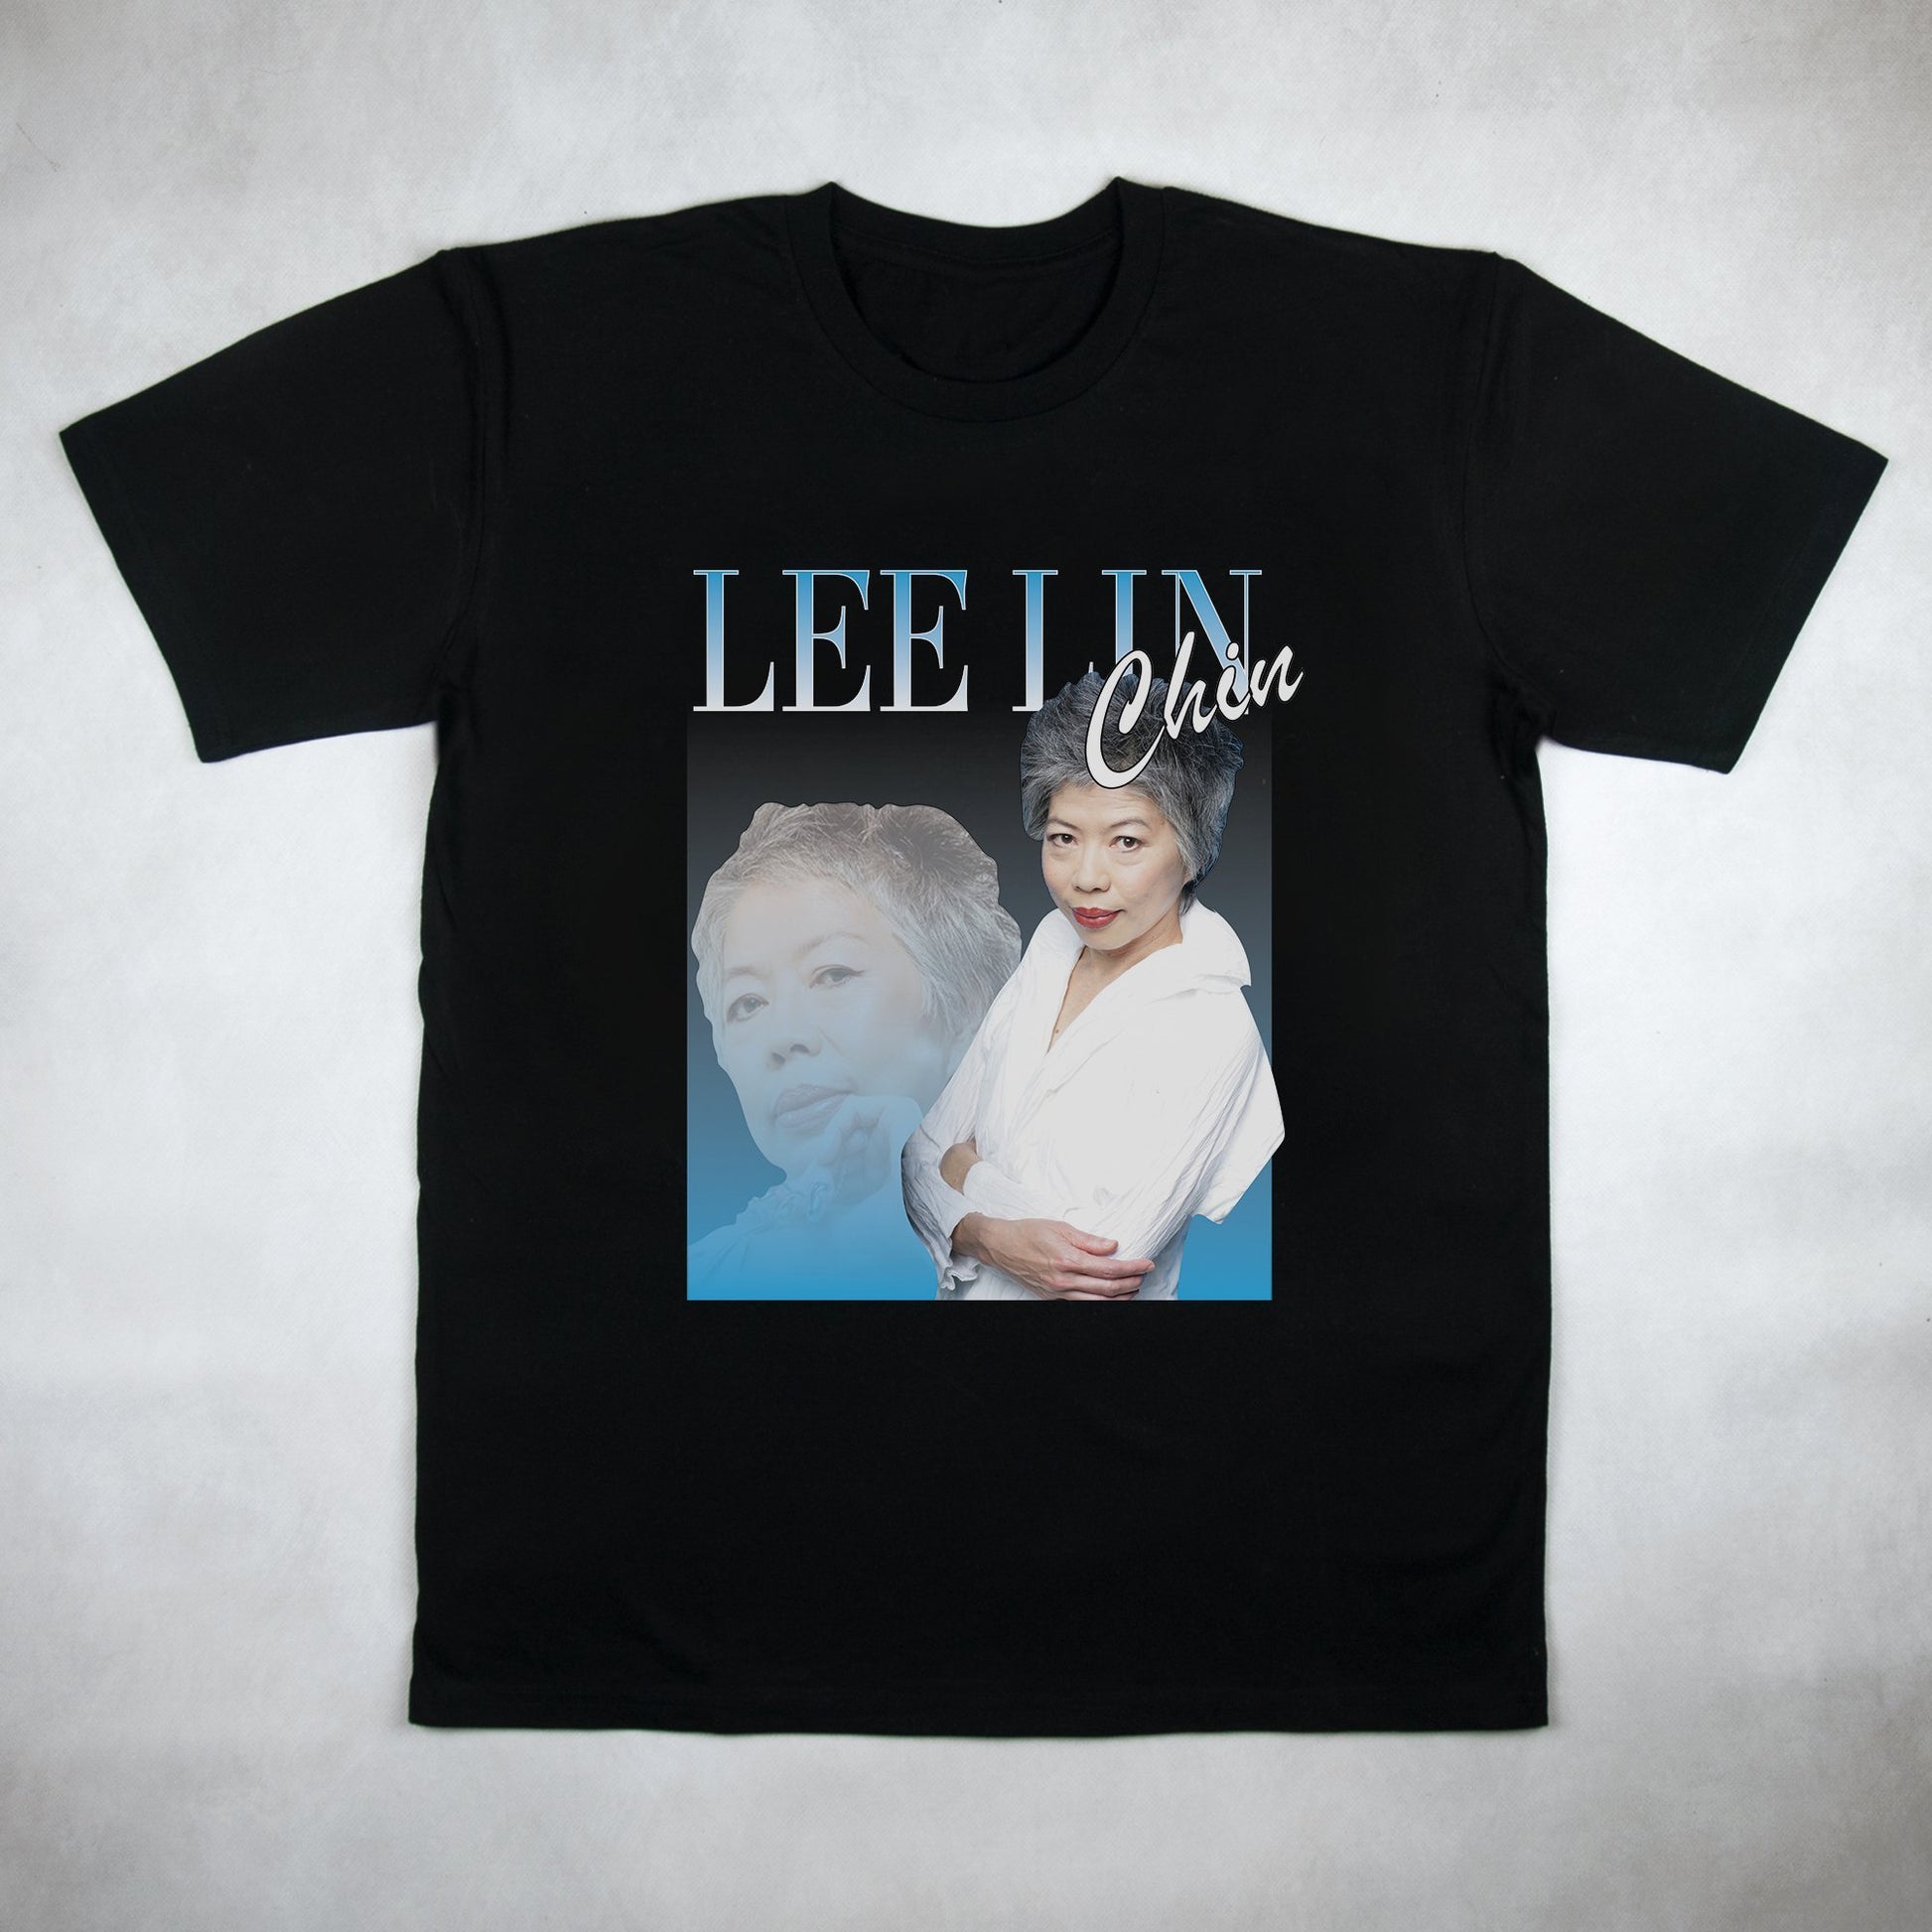 Classy Duds Short Sleeve T-Shirts S / Black / Standard Lee Lin Chin Commemorative Classic Tee